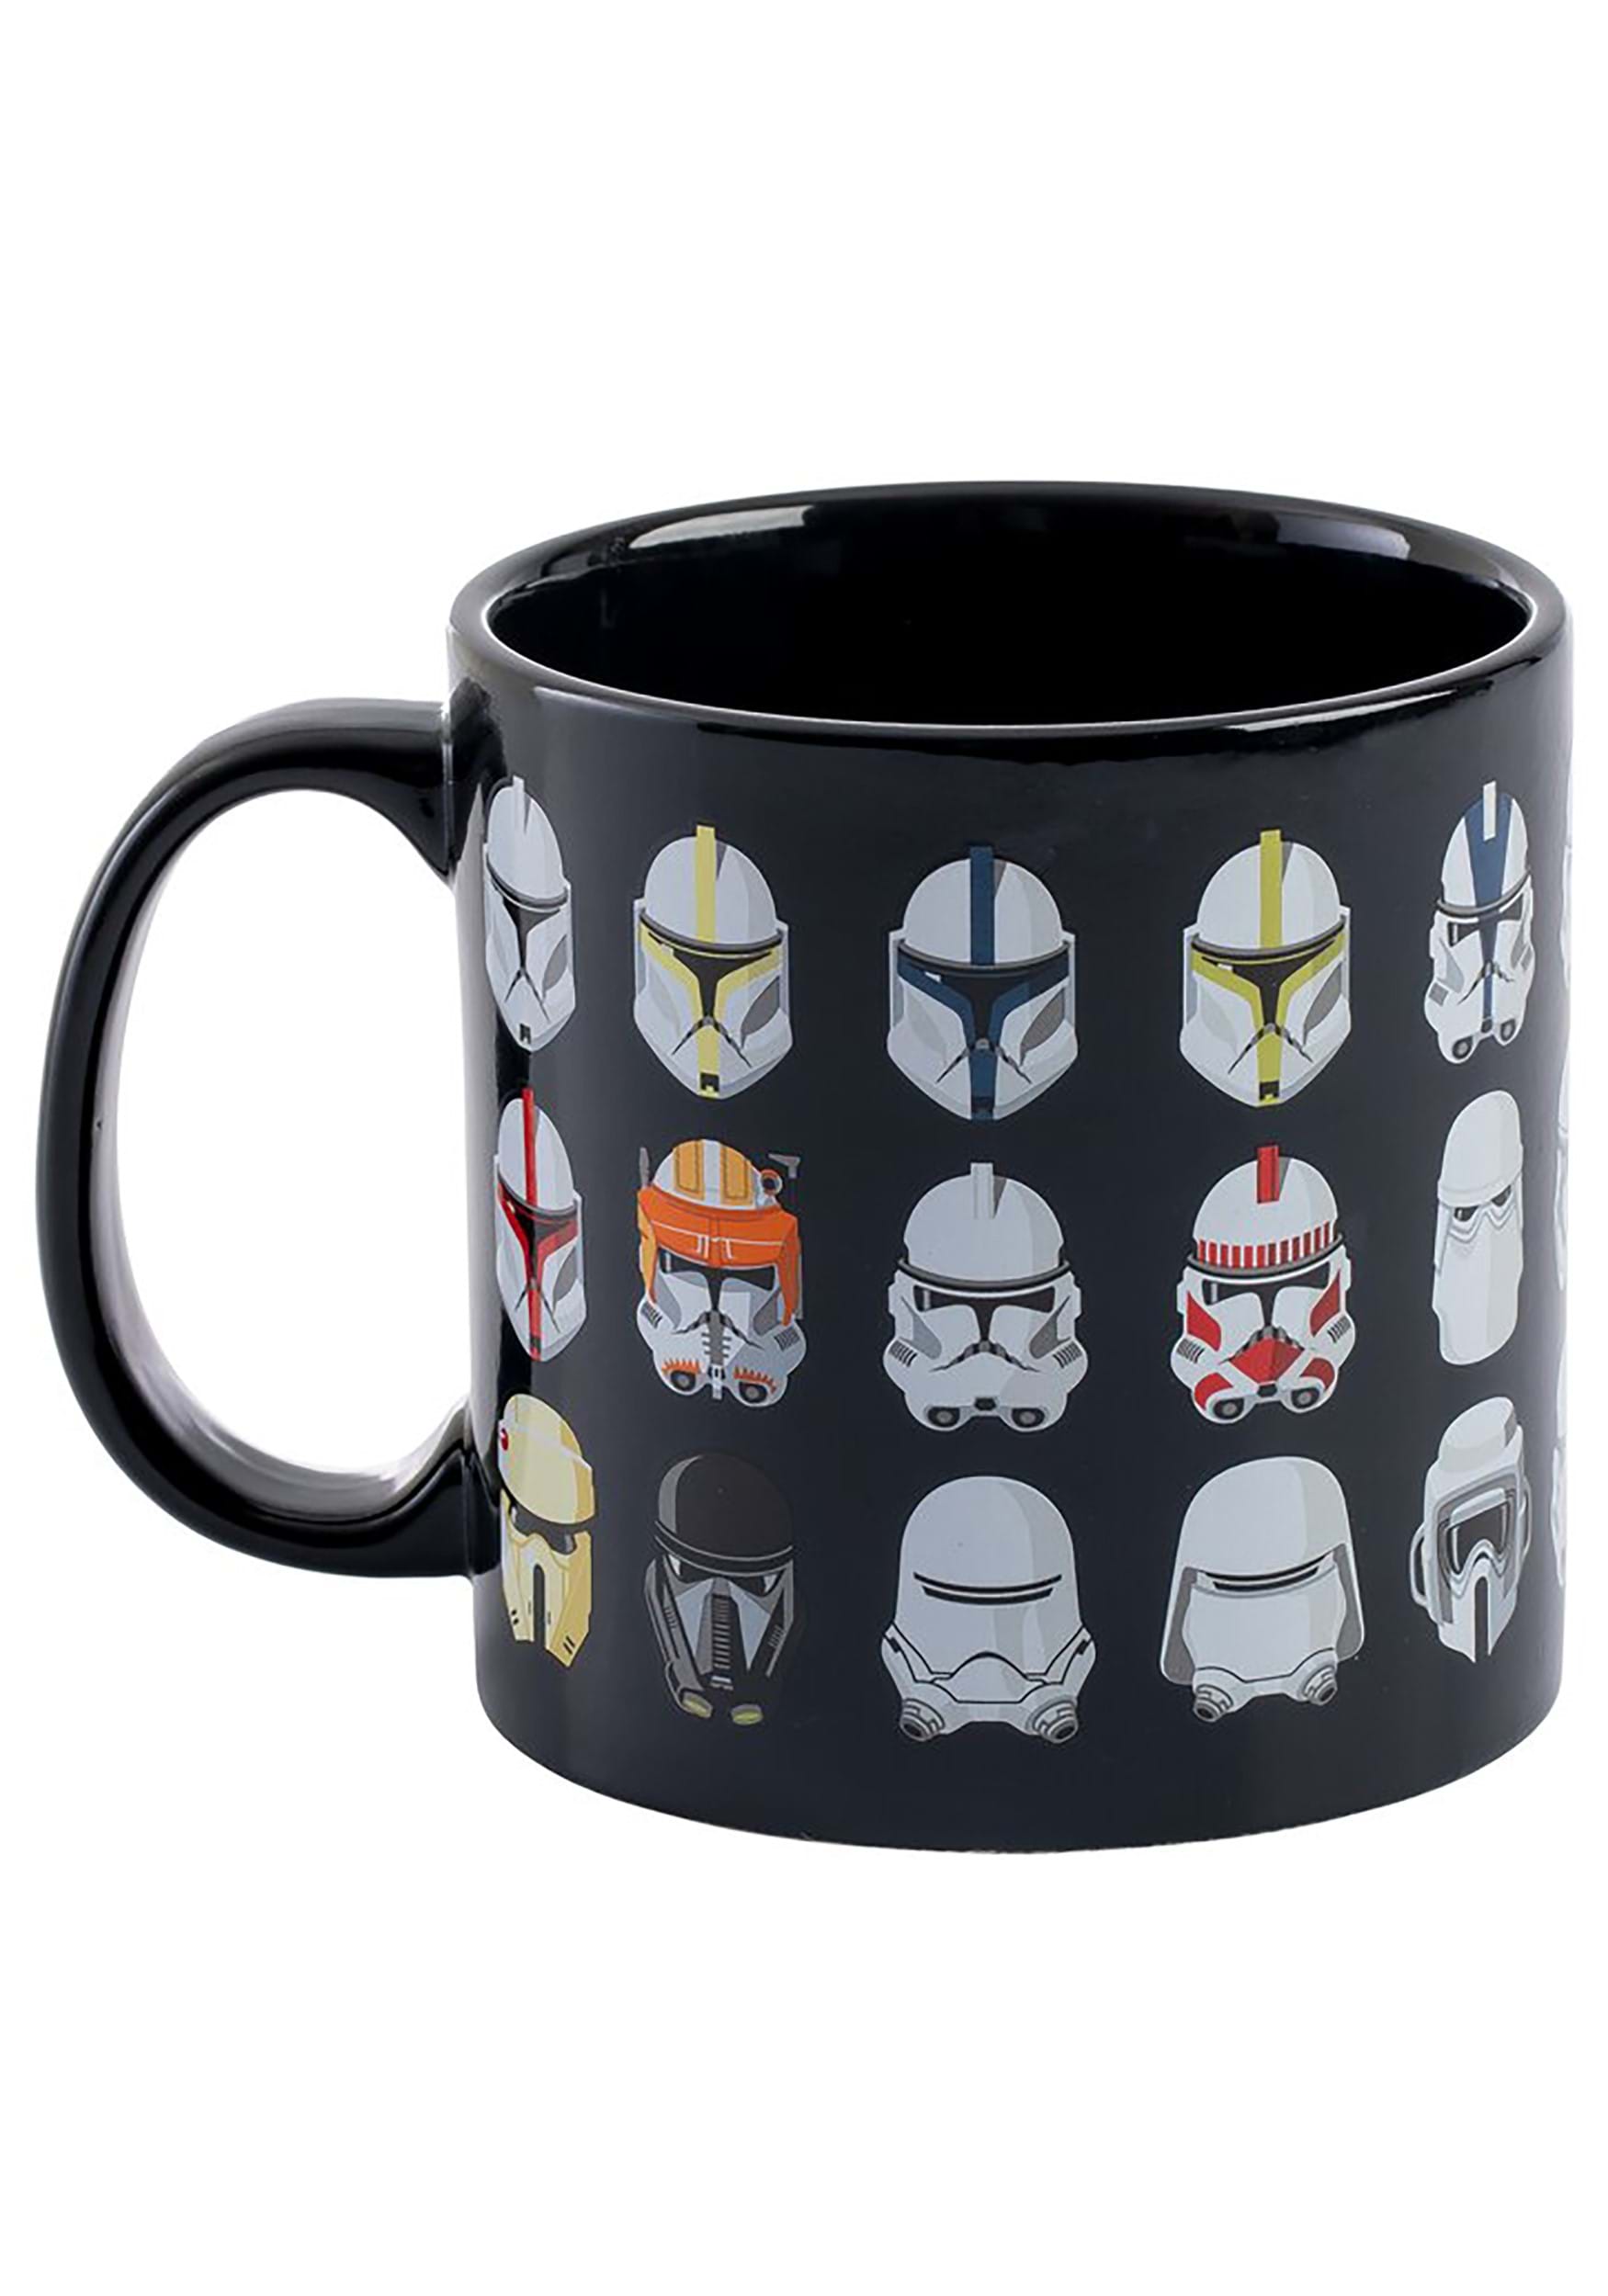 New Star Wars Darth Vader & Stormtrooper Extra Large Coffee Mug Cup 20 oz 